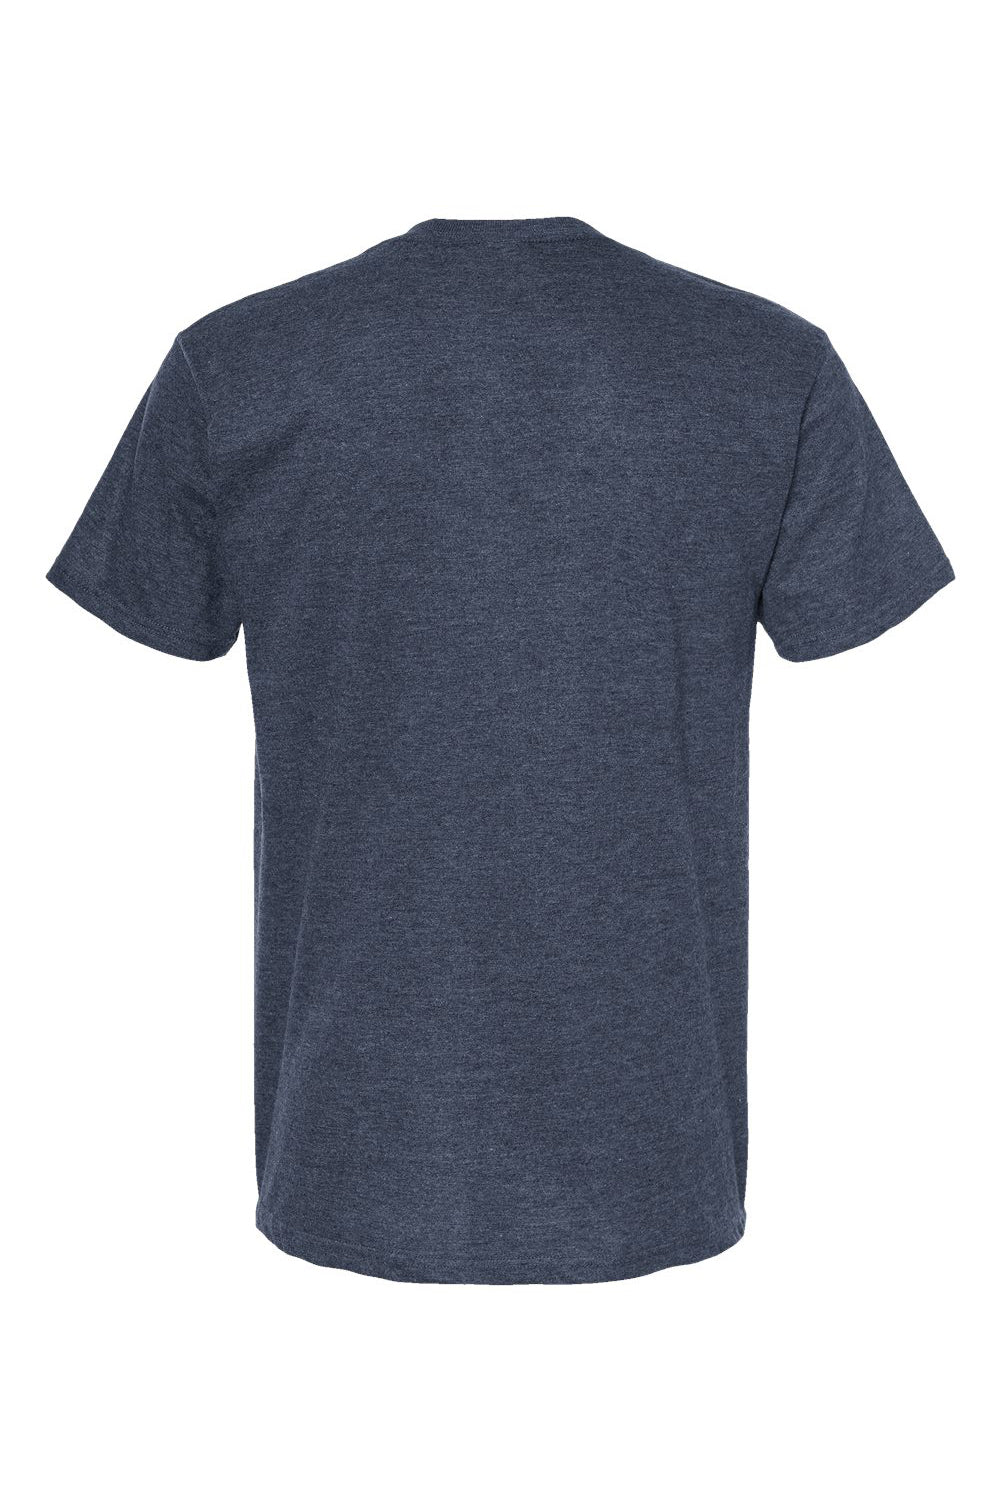 Tultex 290 Mens Jersey Short Sleeve Crewneck T-Shirt Heather Denim Blue Flat Back